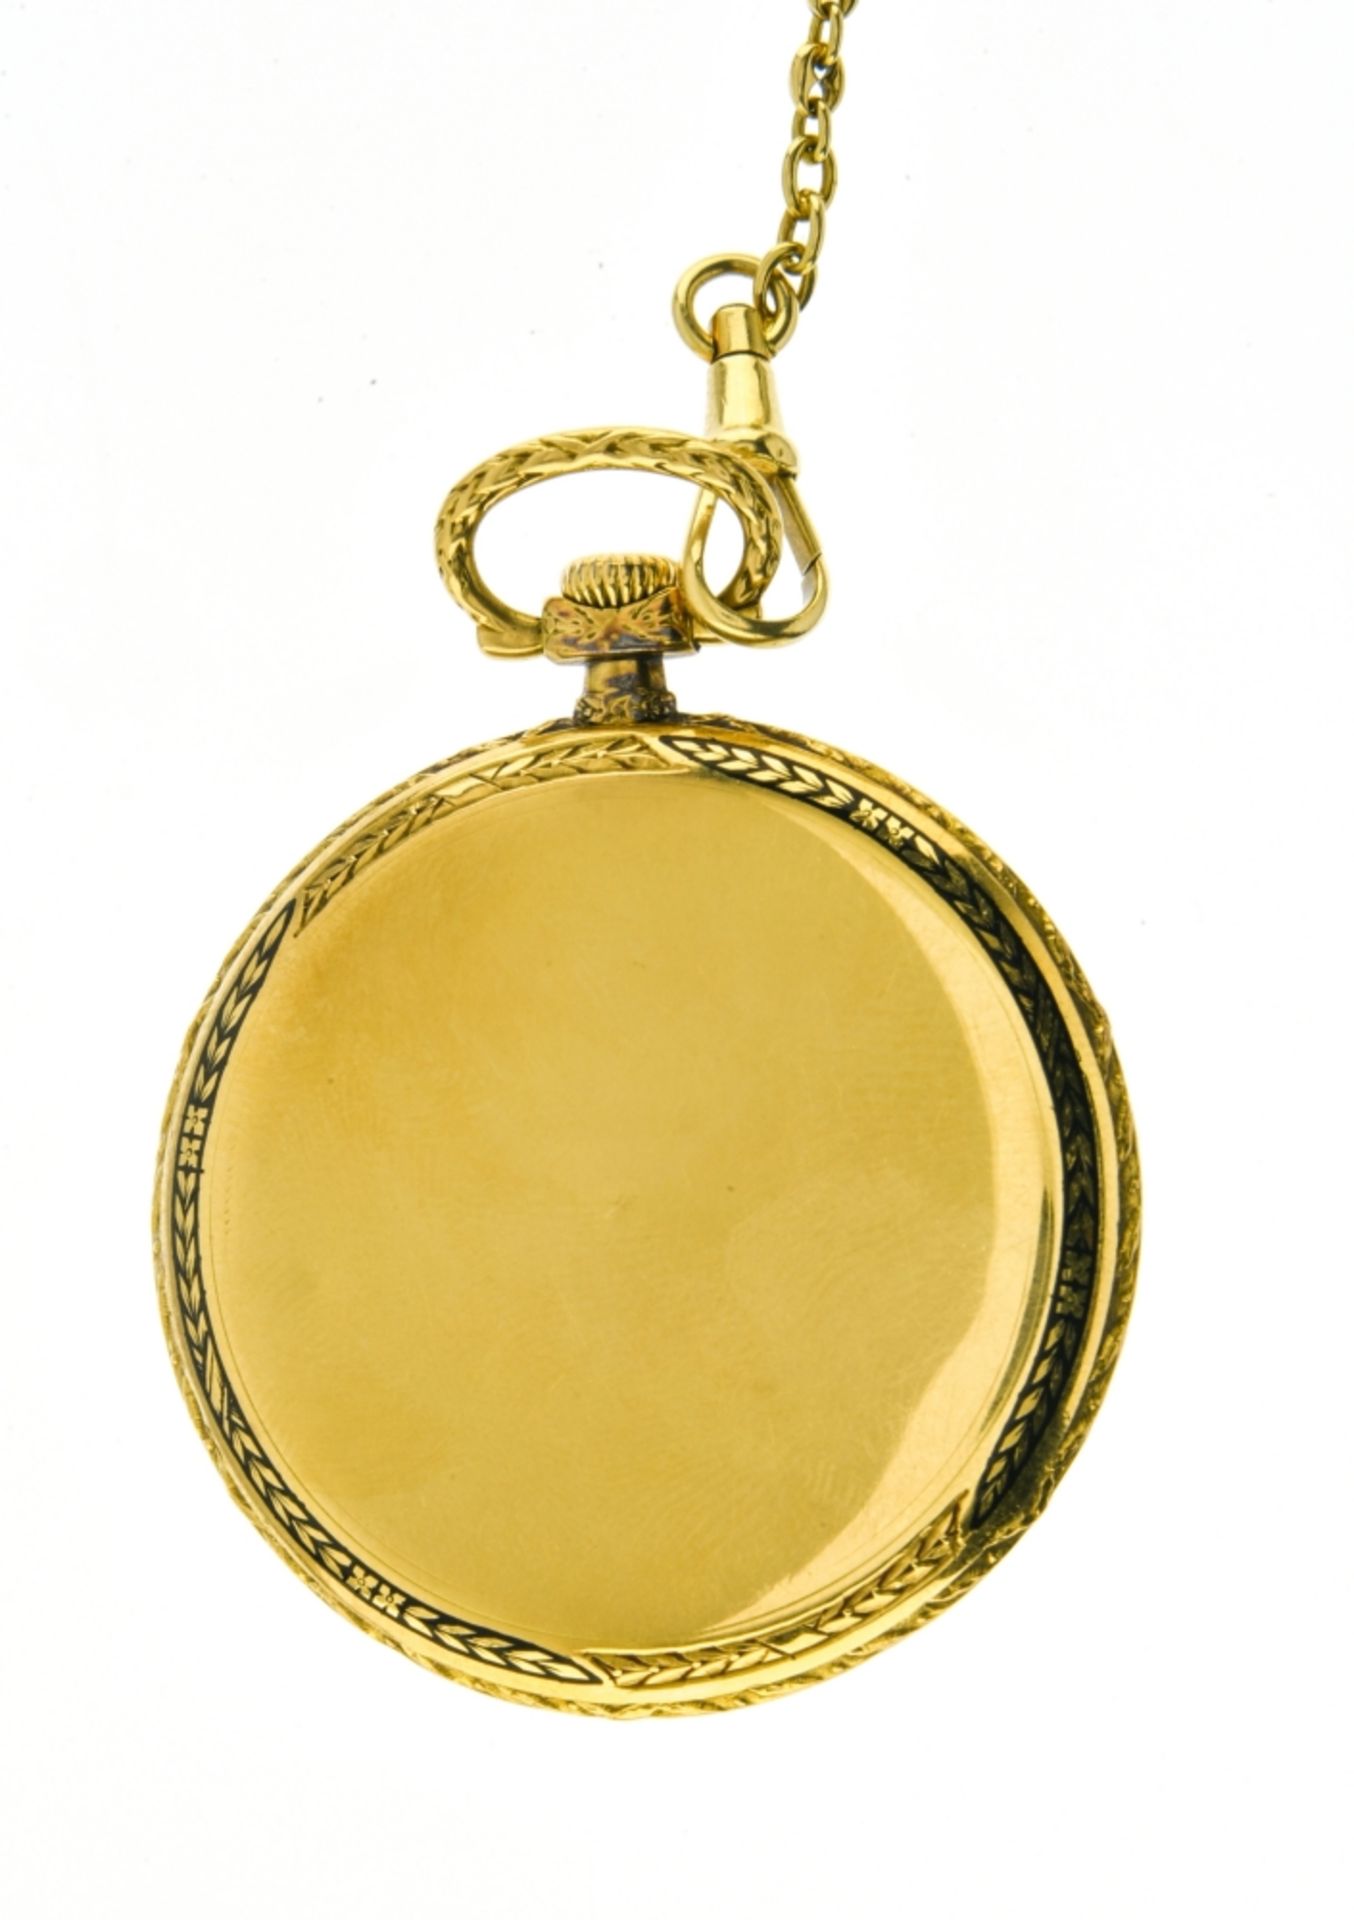 Vacheron Constantin Vacheron Constantin chronometer pocket watch and chain SWITZERLAND 18k gold - Image 2 of 3